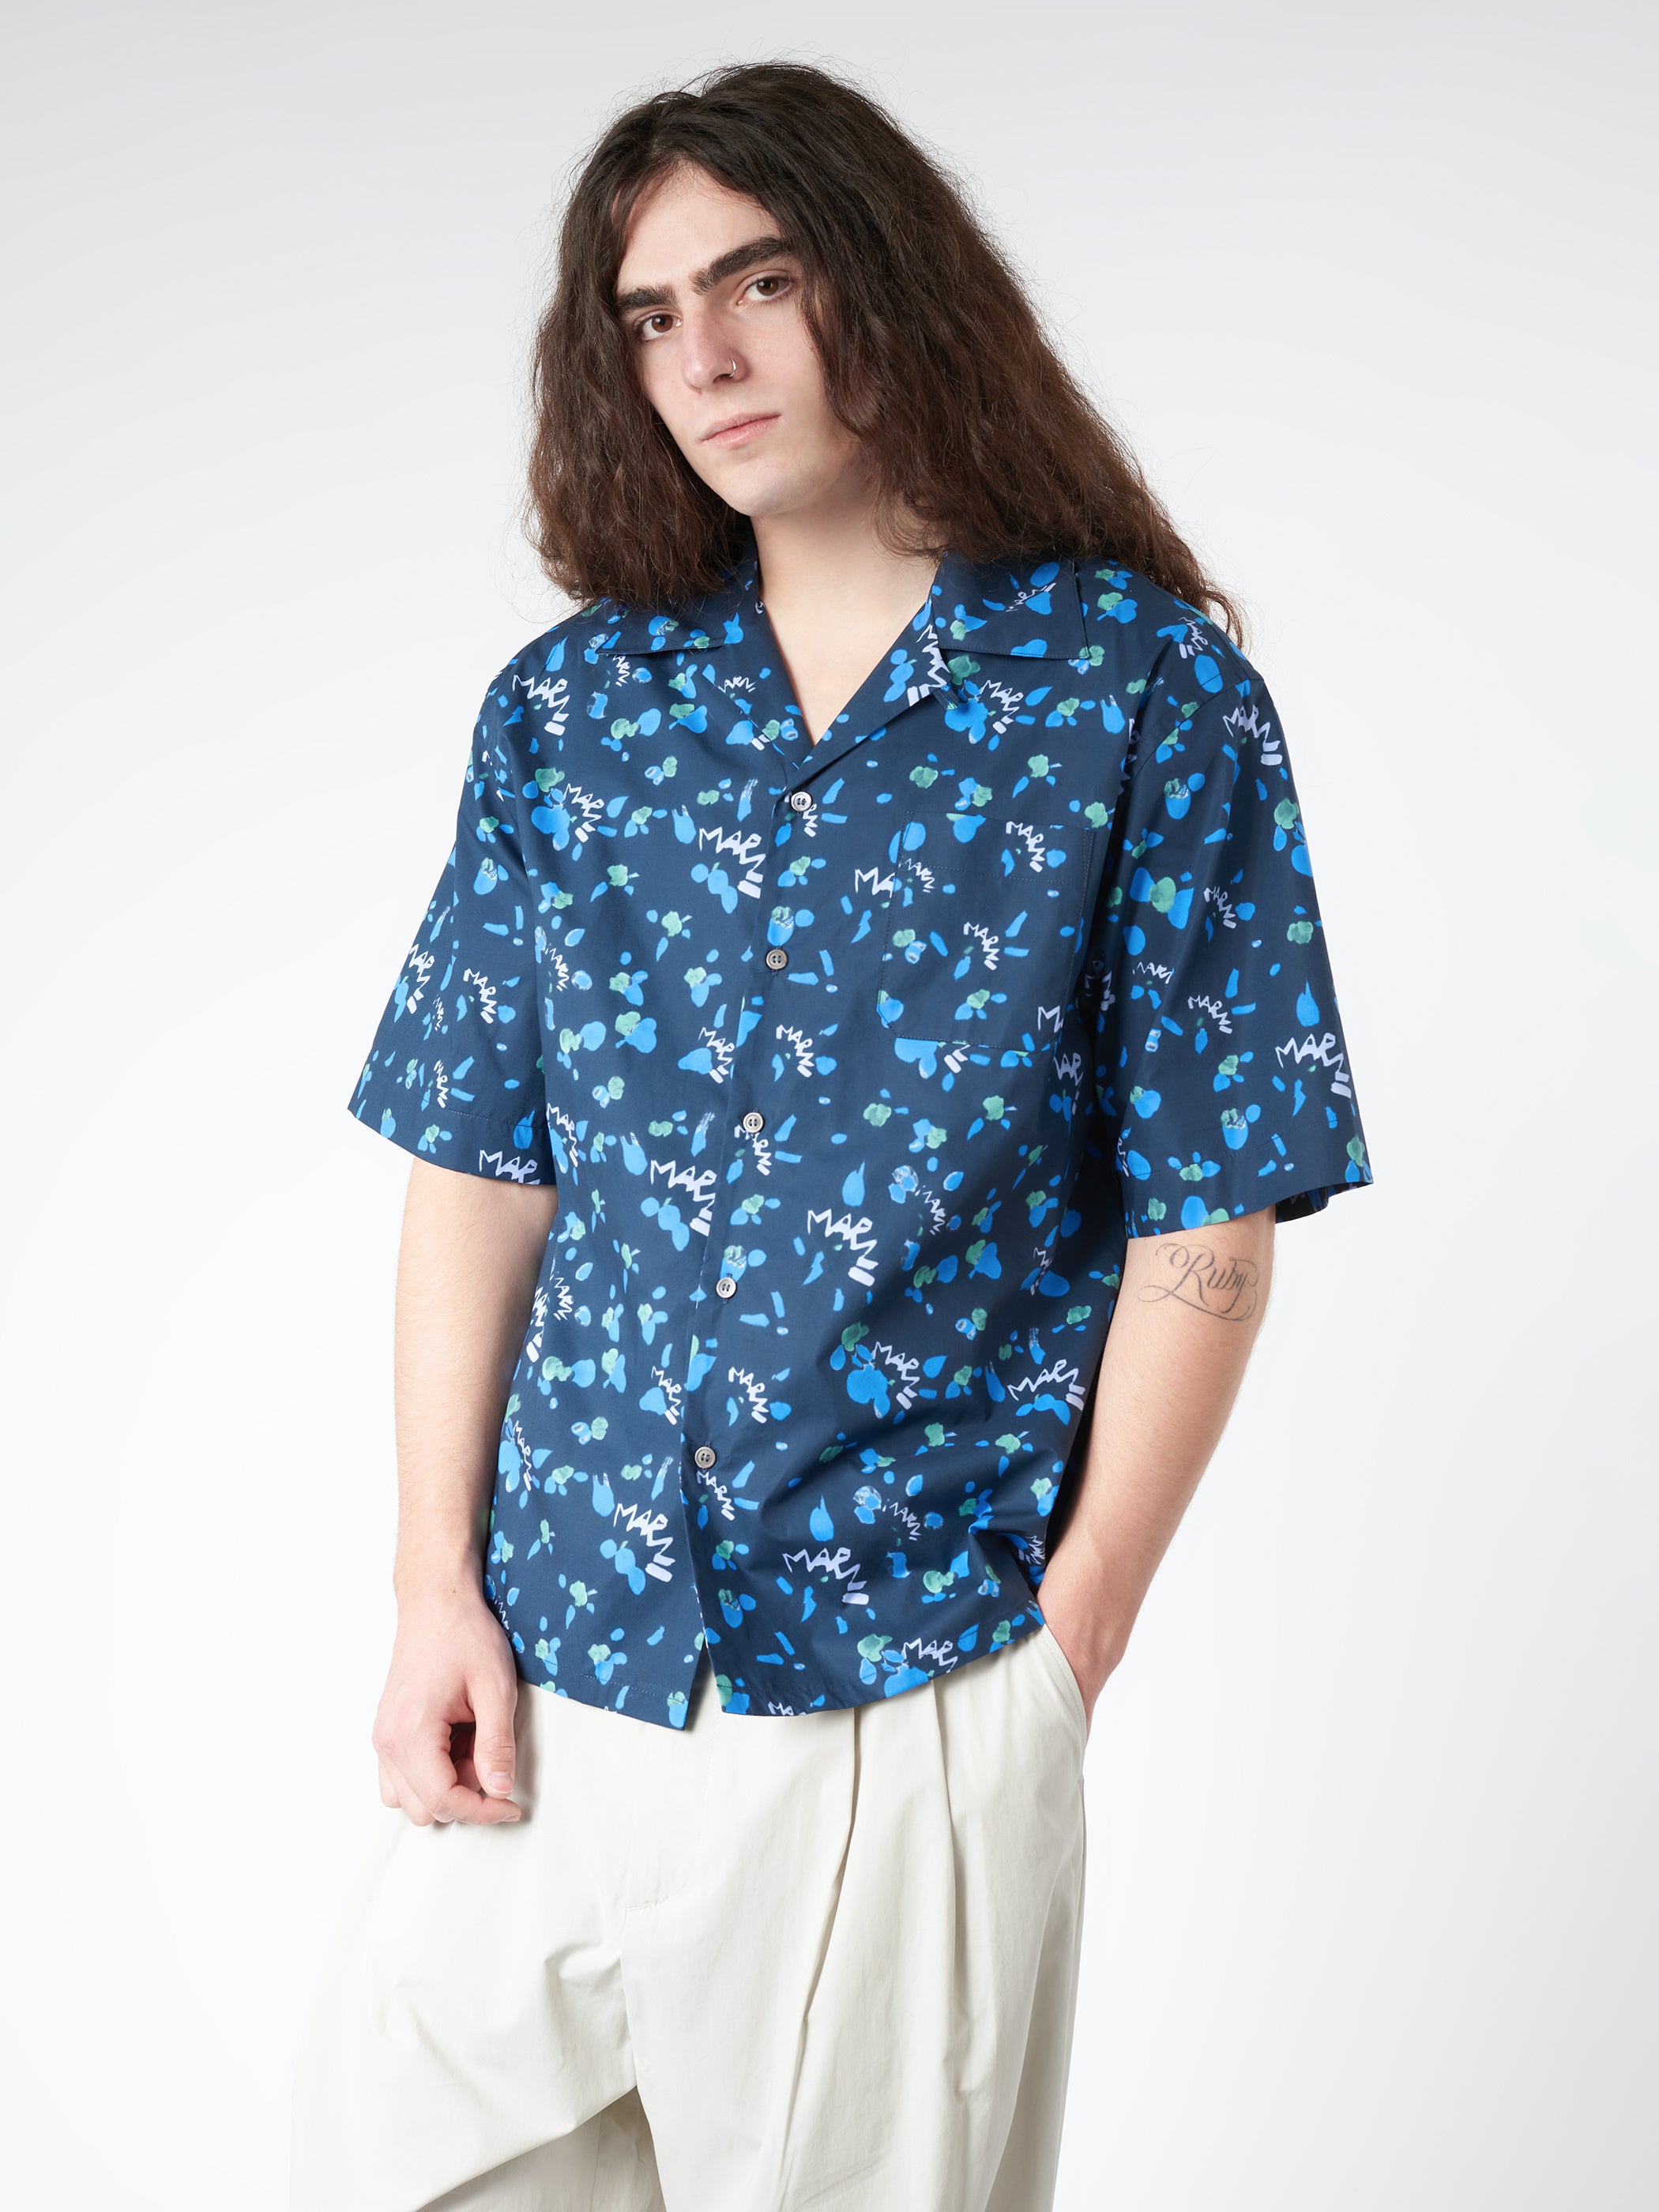 Bowling Shirt with Marni Dripping Print